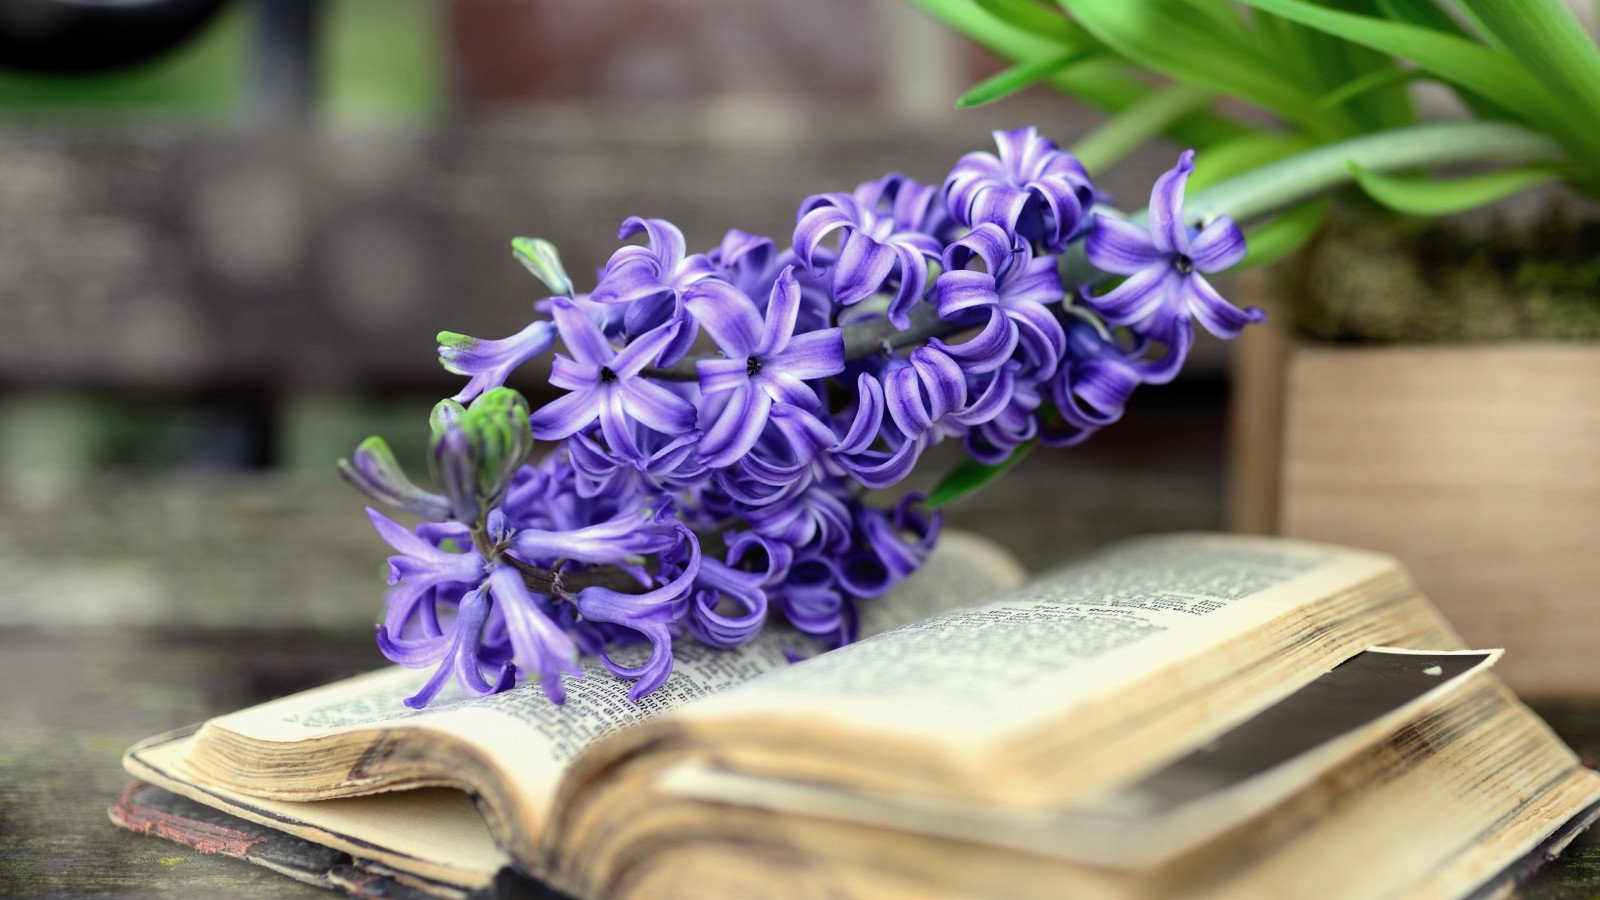 Download wallpaper: Hyacinth Spring flowers 1600x900